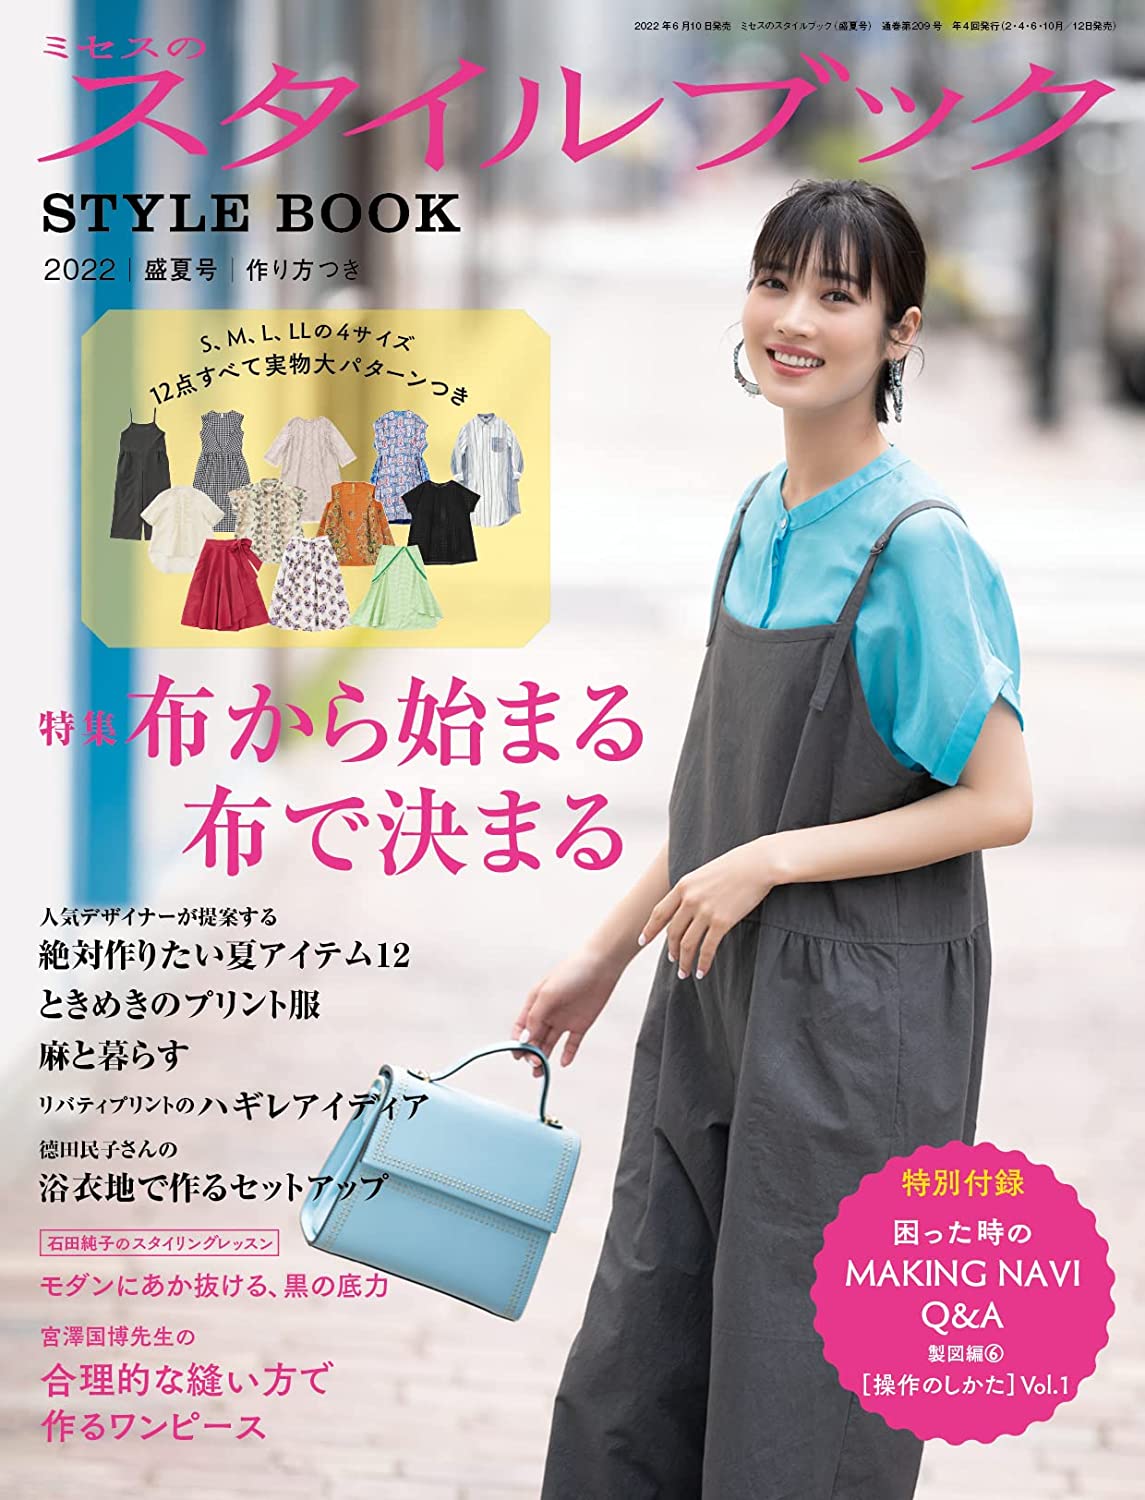 Mrs. Style Book 2022 Midsummer (Magazine)